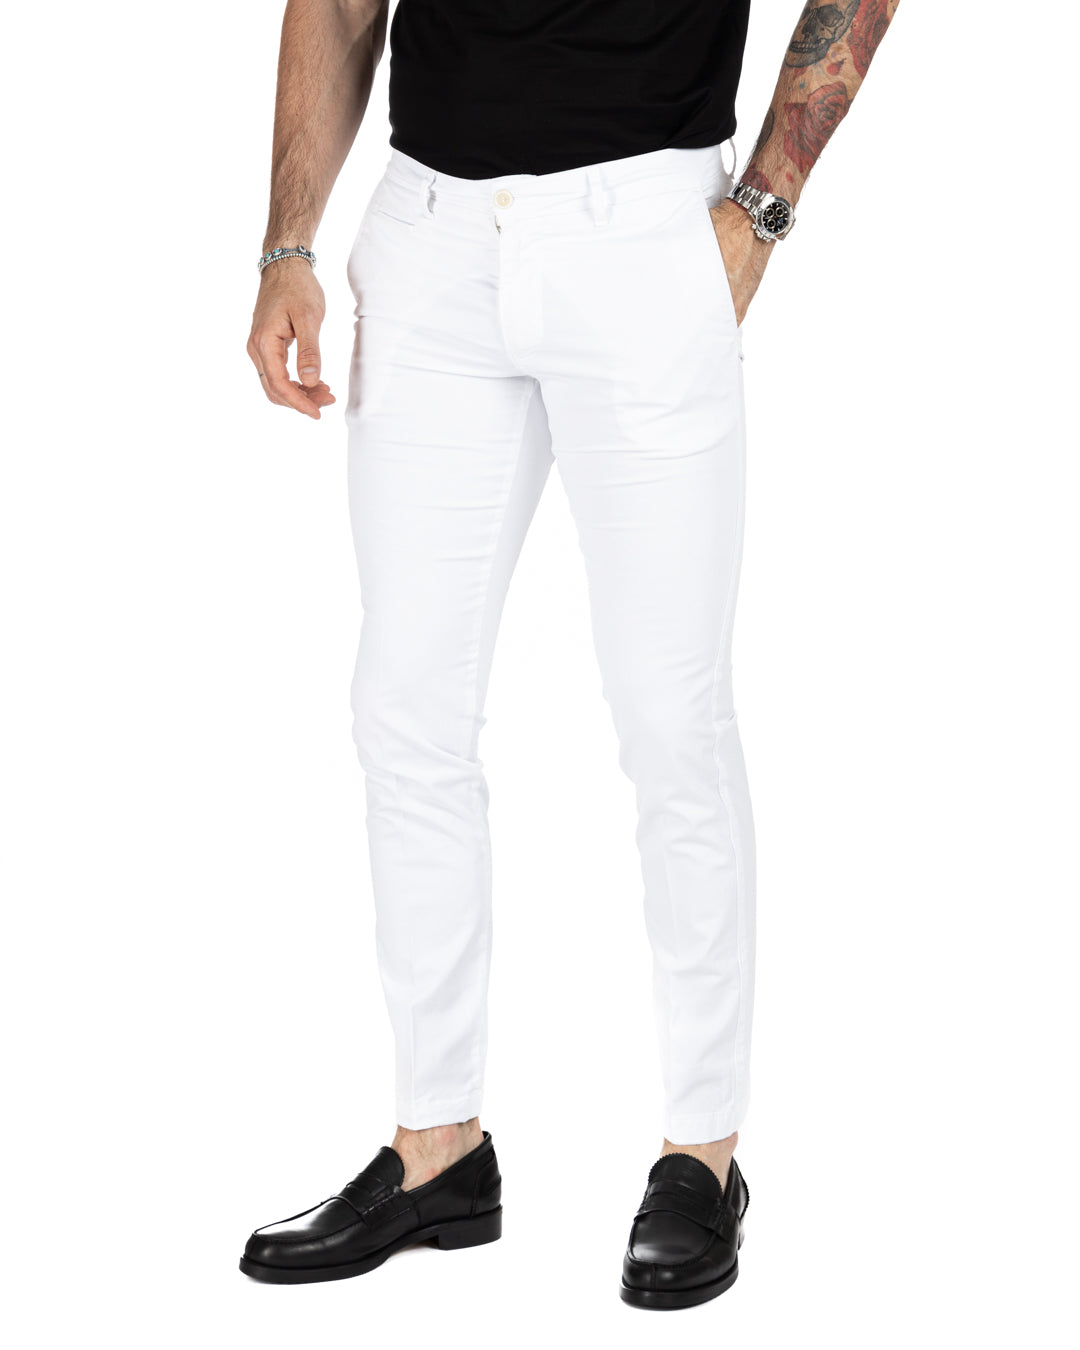 Frank - pantalon blanc basique